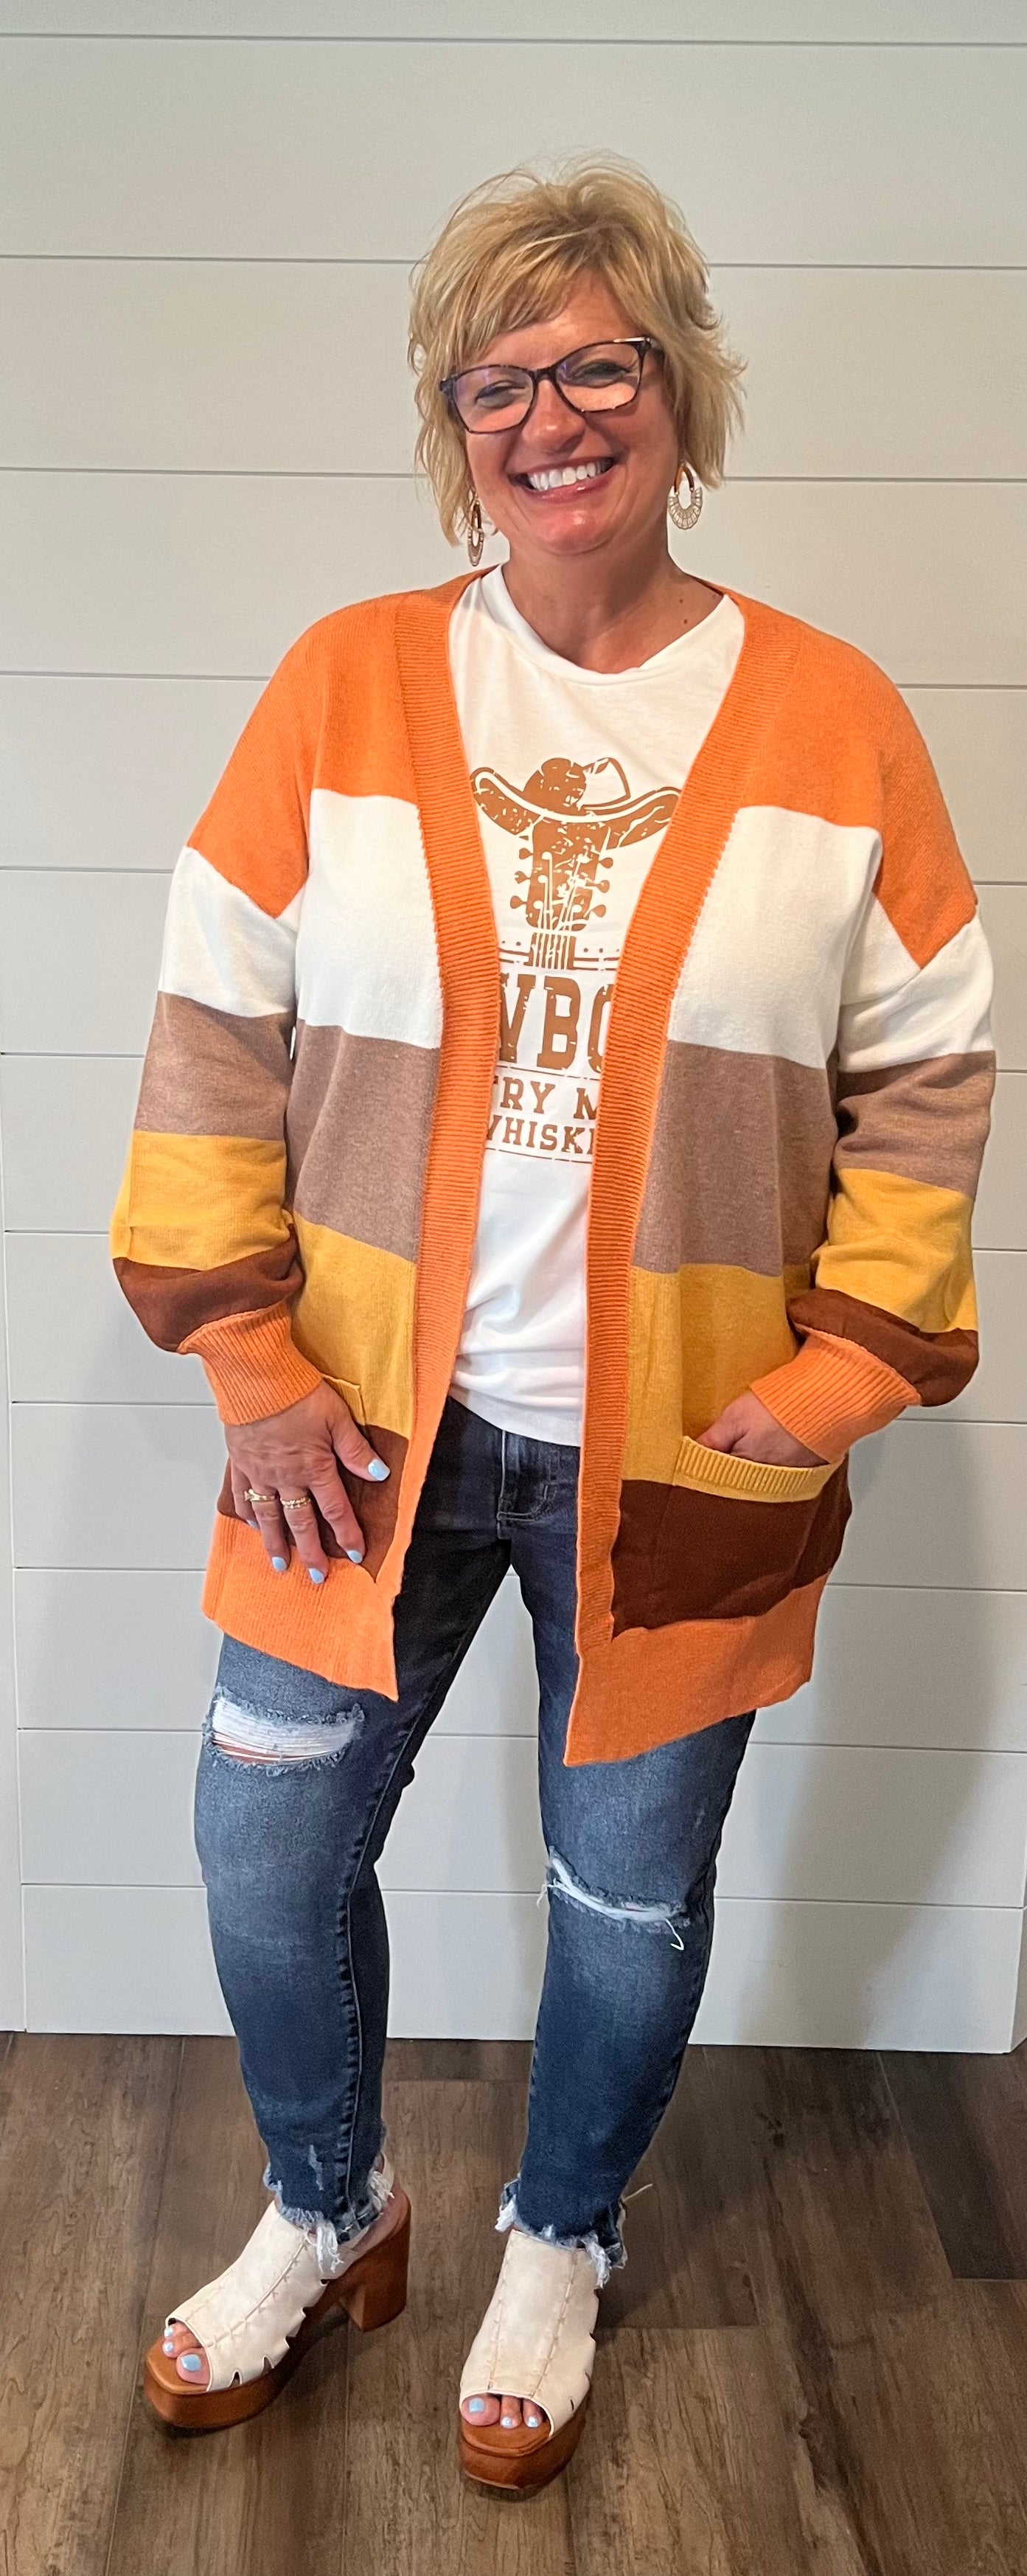 Striped Fall Cardigan Regular & Plus